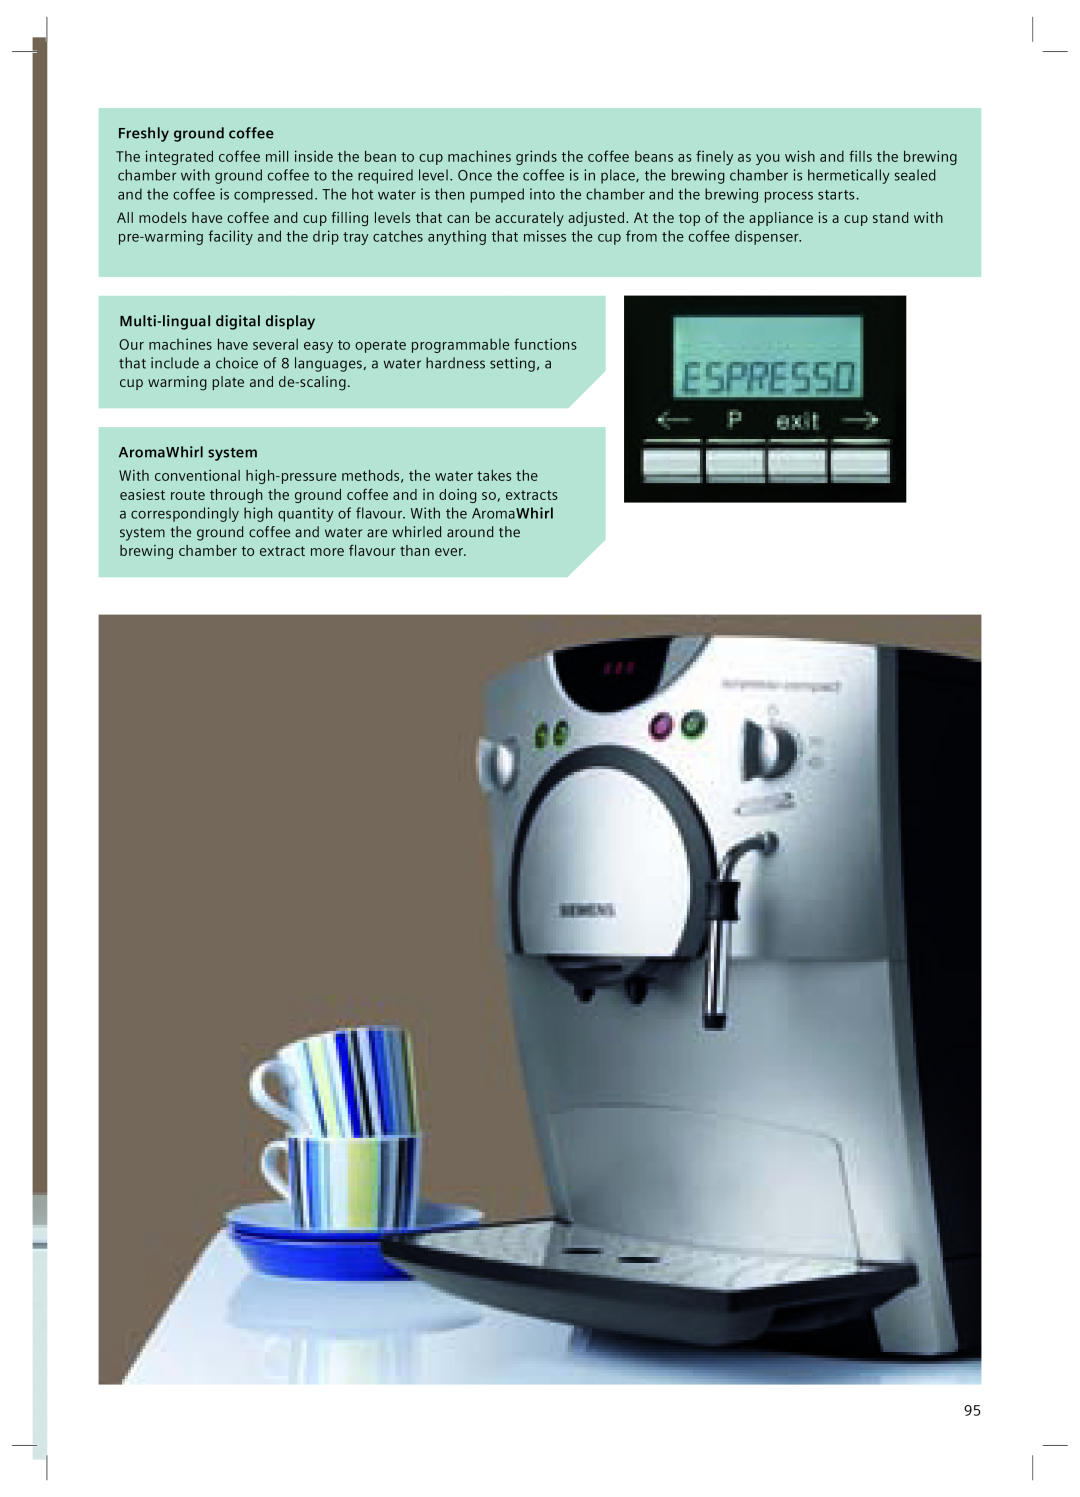 Nespresso TK70N01GB, TK50N01GB, TK911N2GB, TK30N01GB Freshly ground coffee, AromaWhirl system, Multi-lingualdigital display 